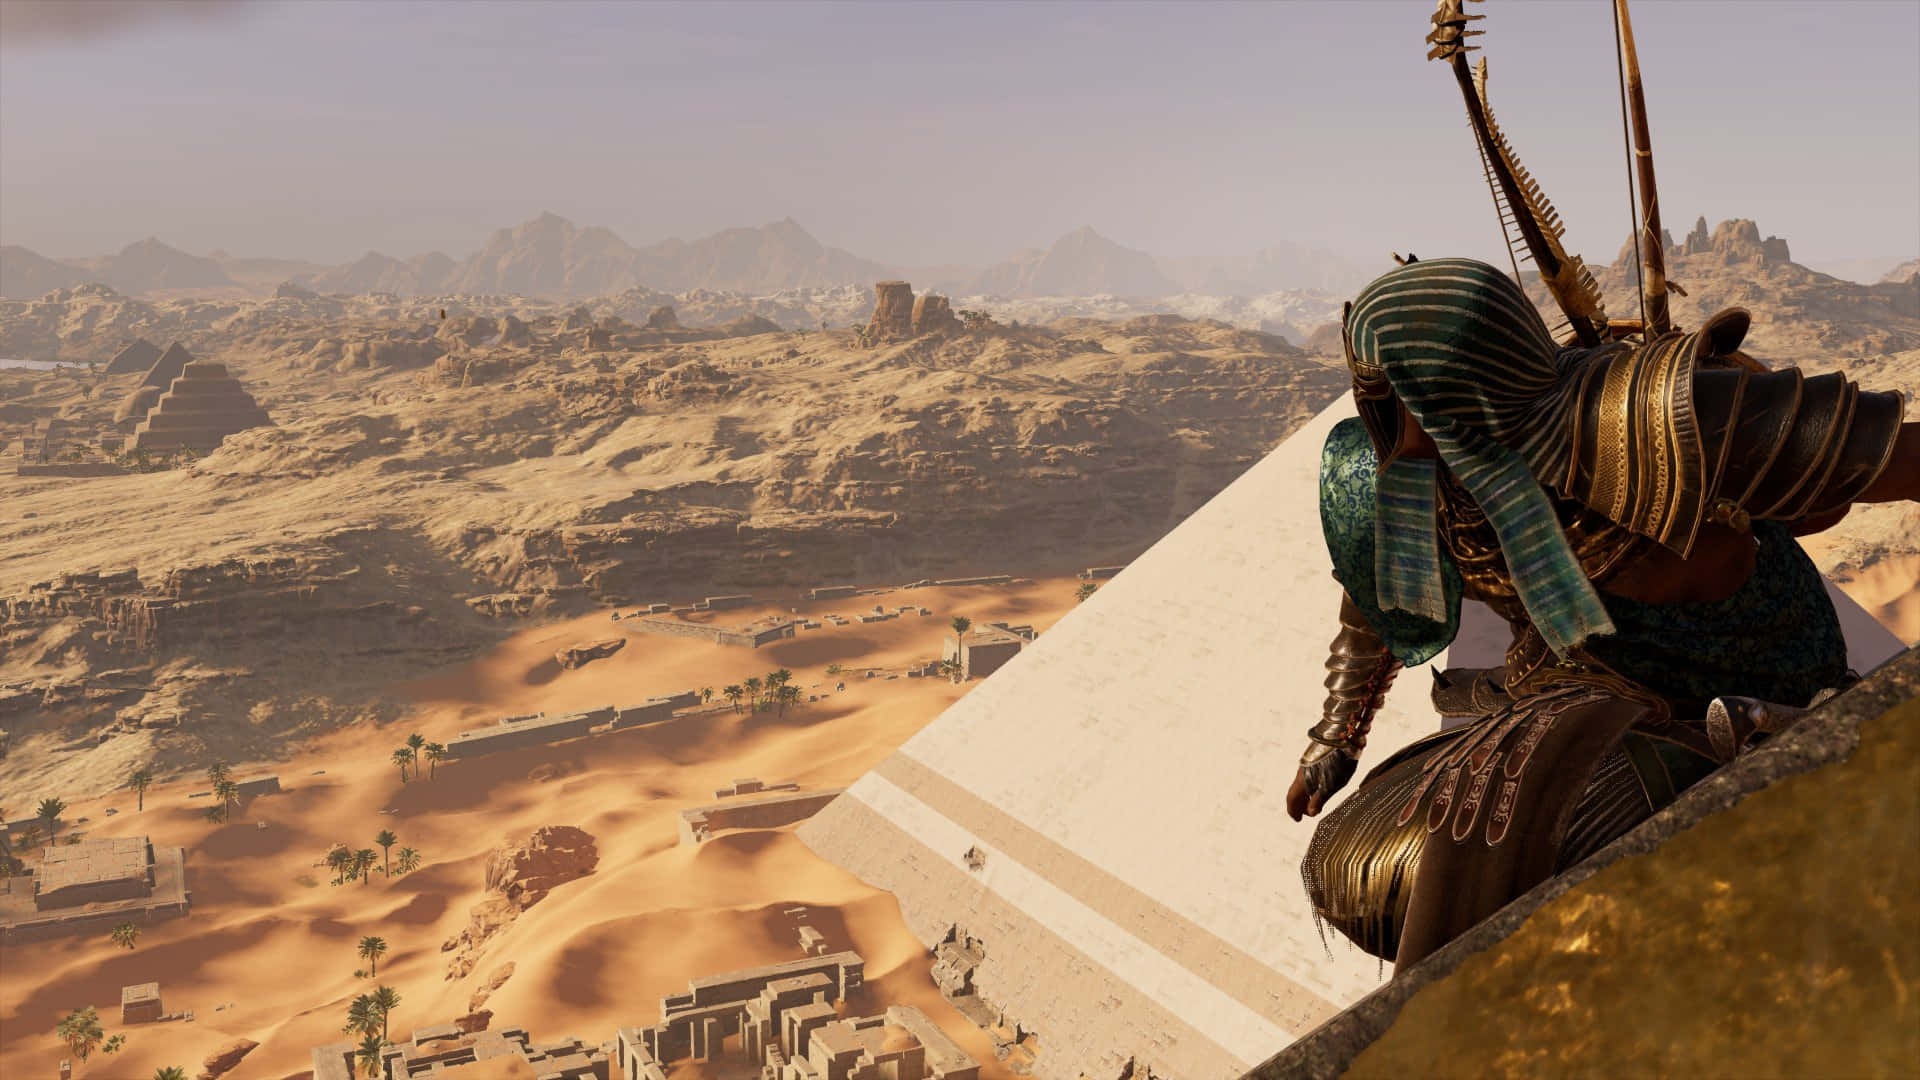 Pyramid Scenery 1920x1080 Assassin's Creed Origins Background